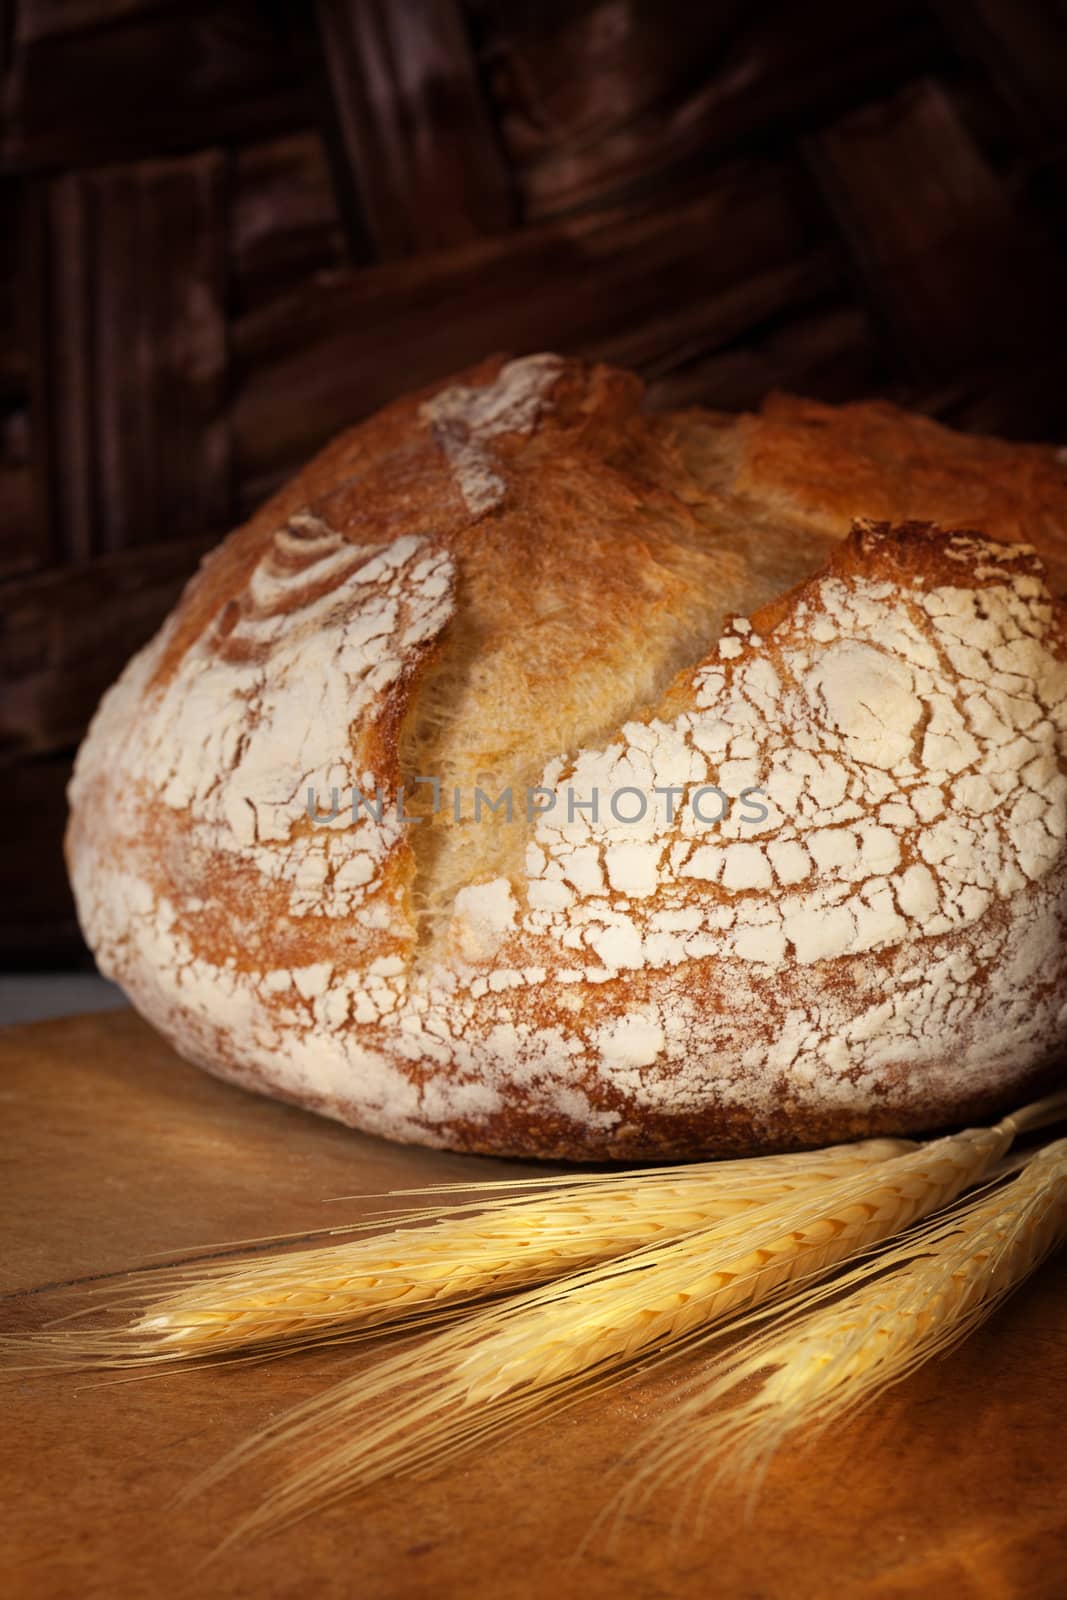 Crannied rustical homemade bread loaf on old cutting board. Dark background.